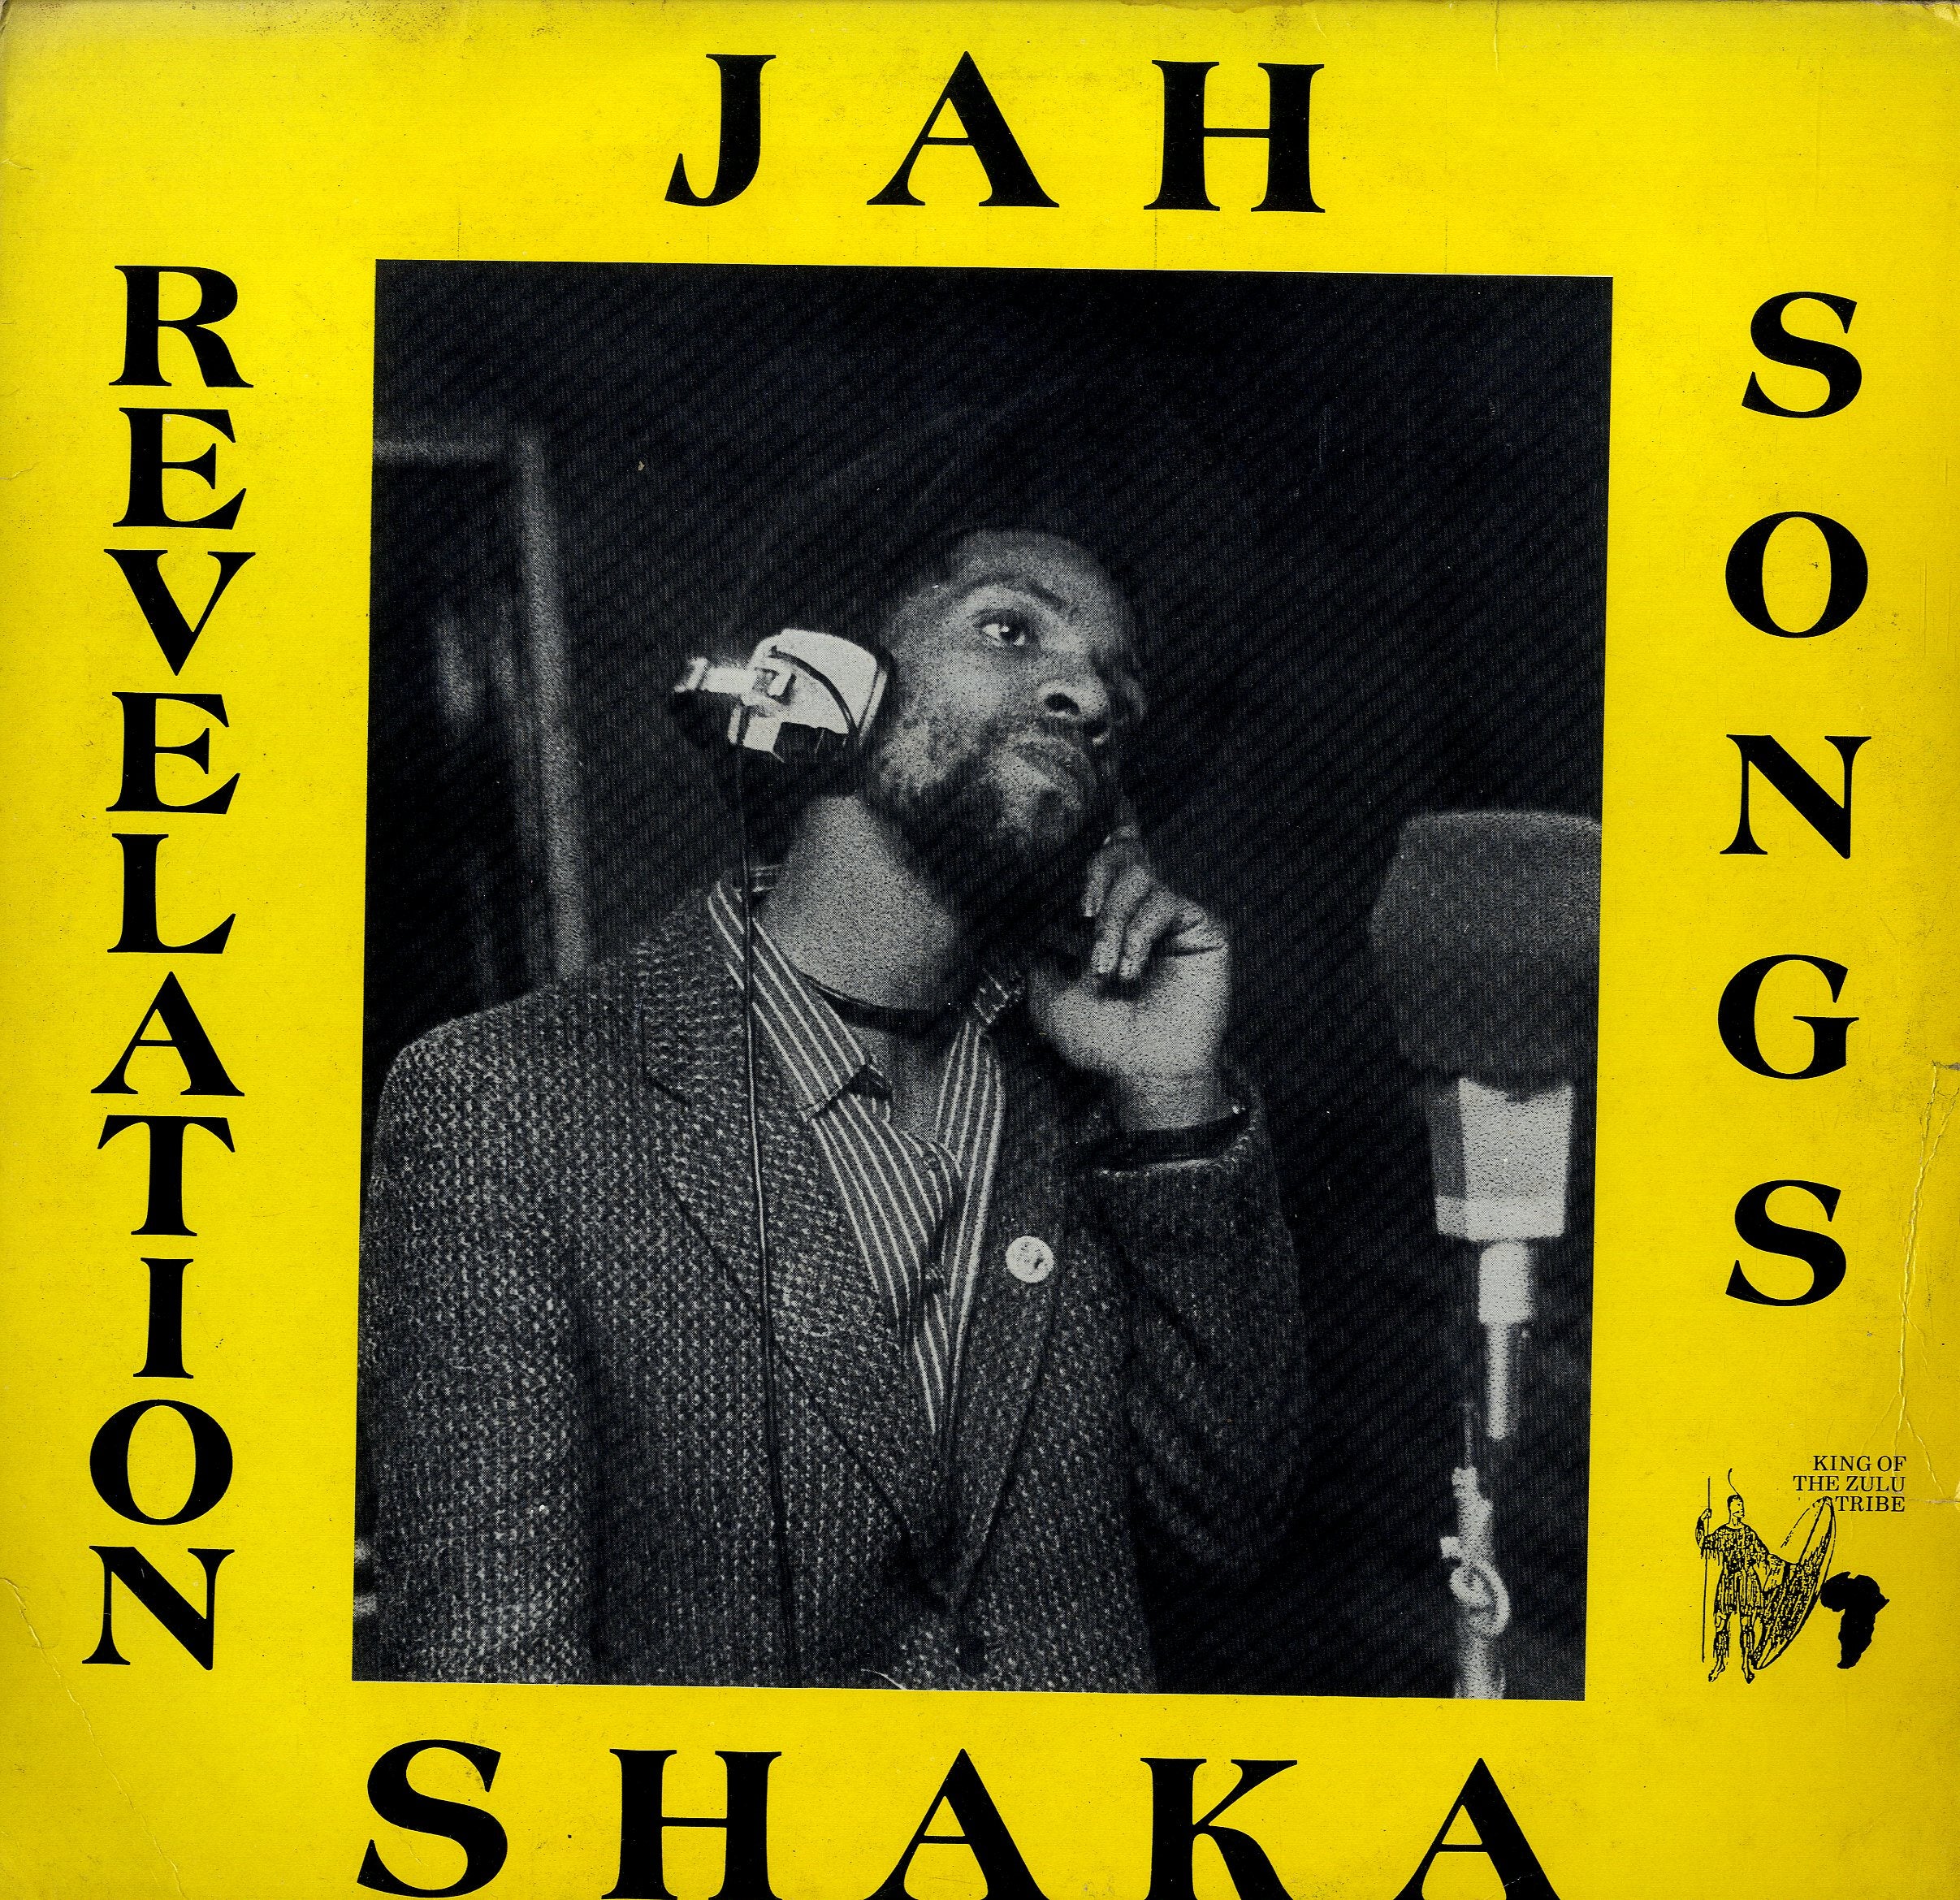 JAH SHAKA [Revelation Songs]